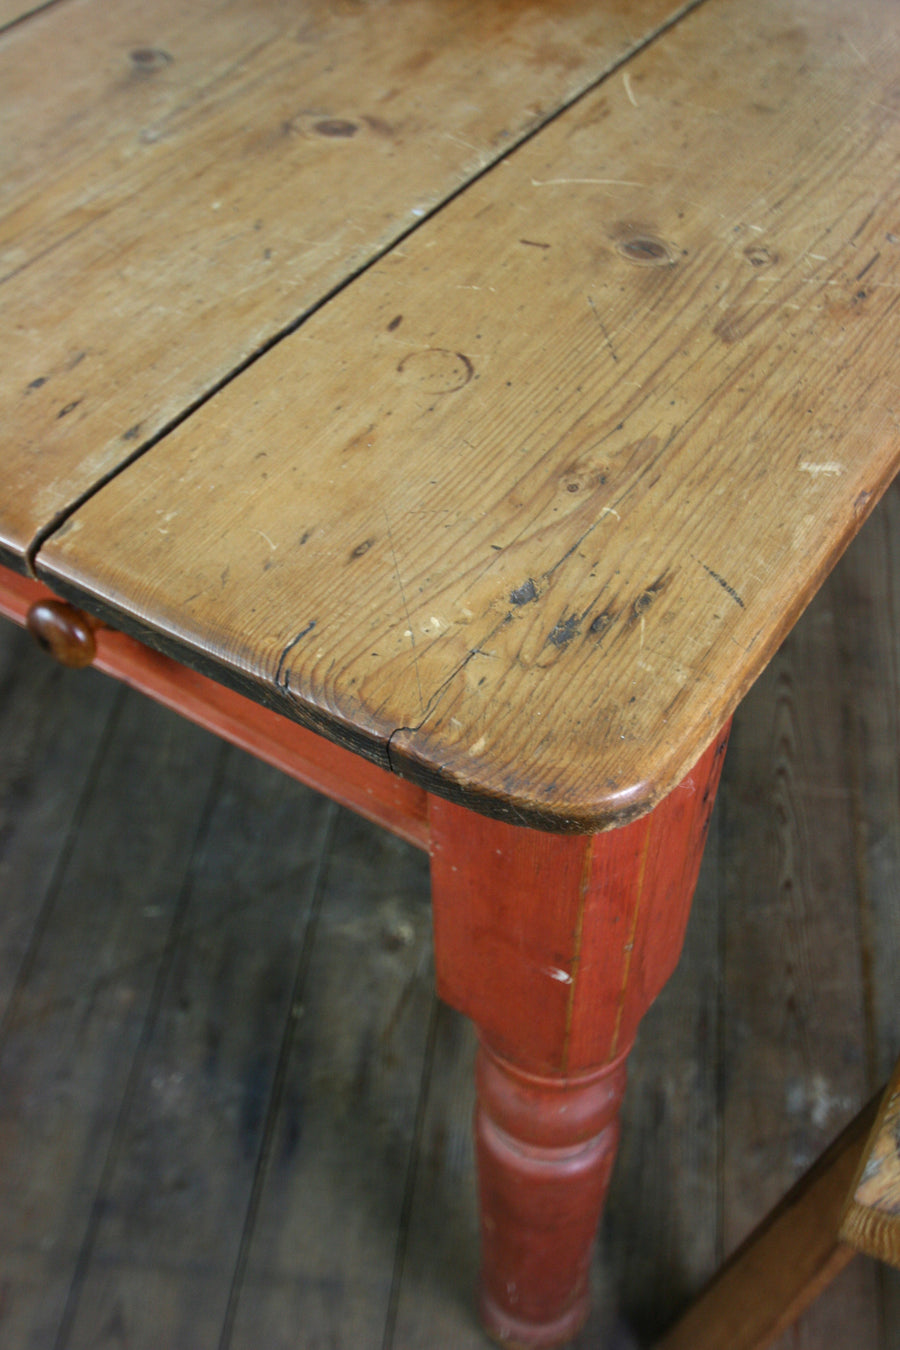 Vintage victorian rough luxe farm kitchen table